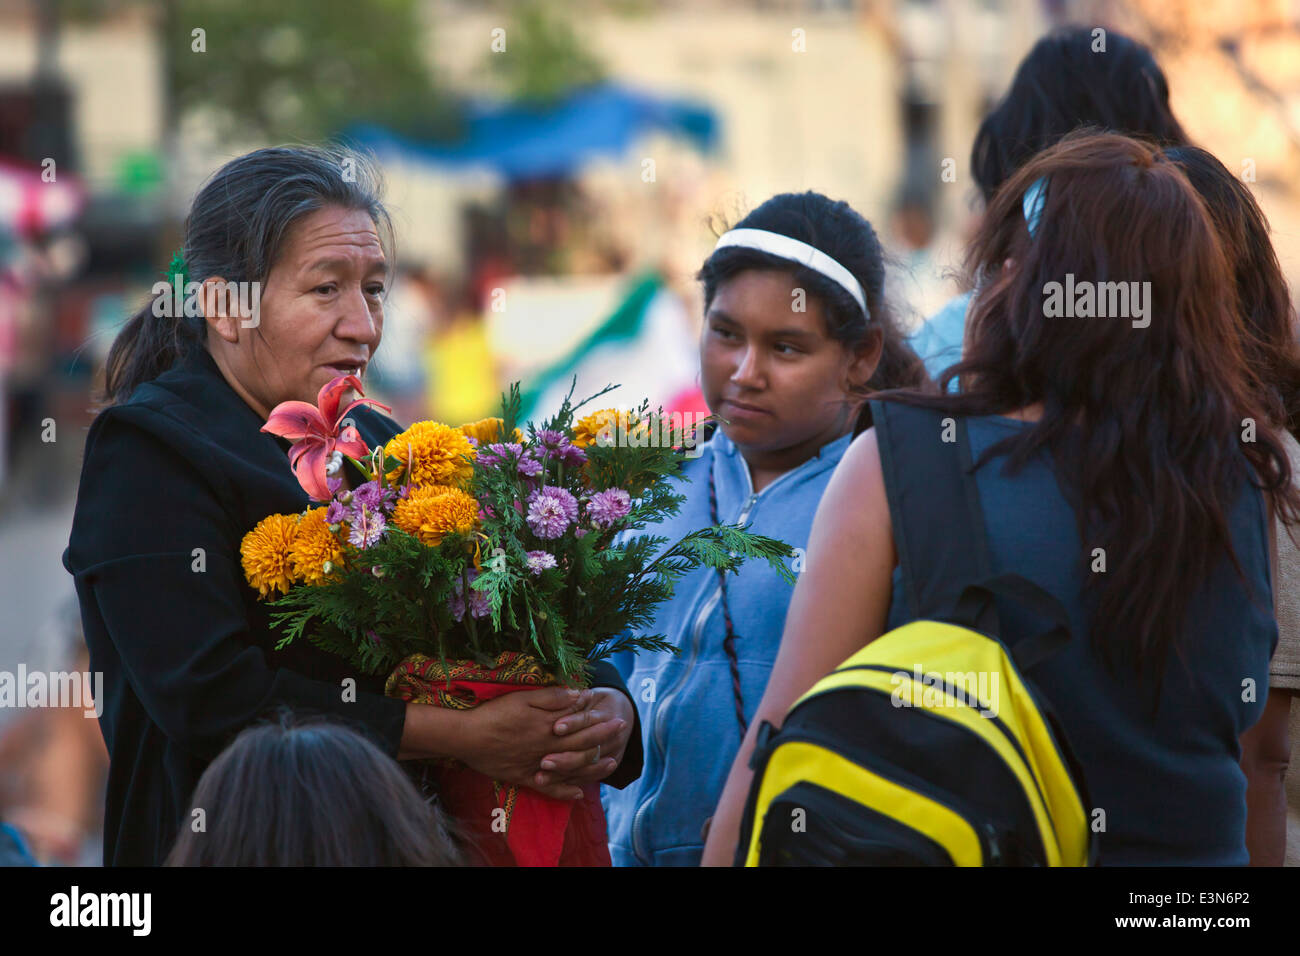 A woman carrying flowers during the DIA DE LOS LOCOS celebration - SAN MIGUEL DE ALLENDE, GUANAJUATO, MEXICO Stock Photo